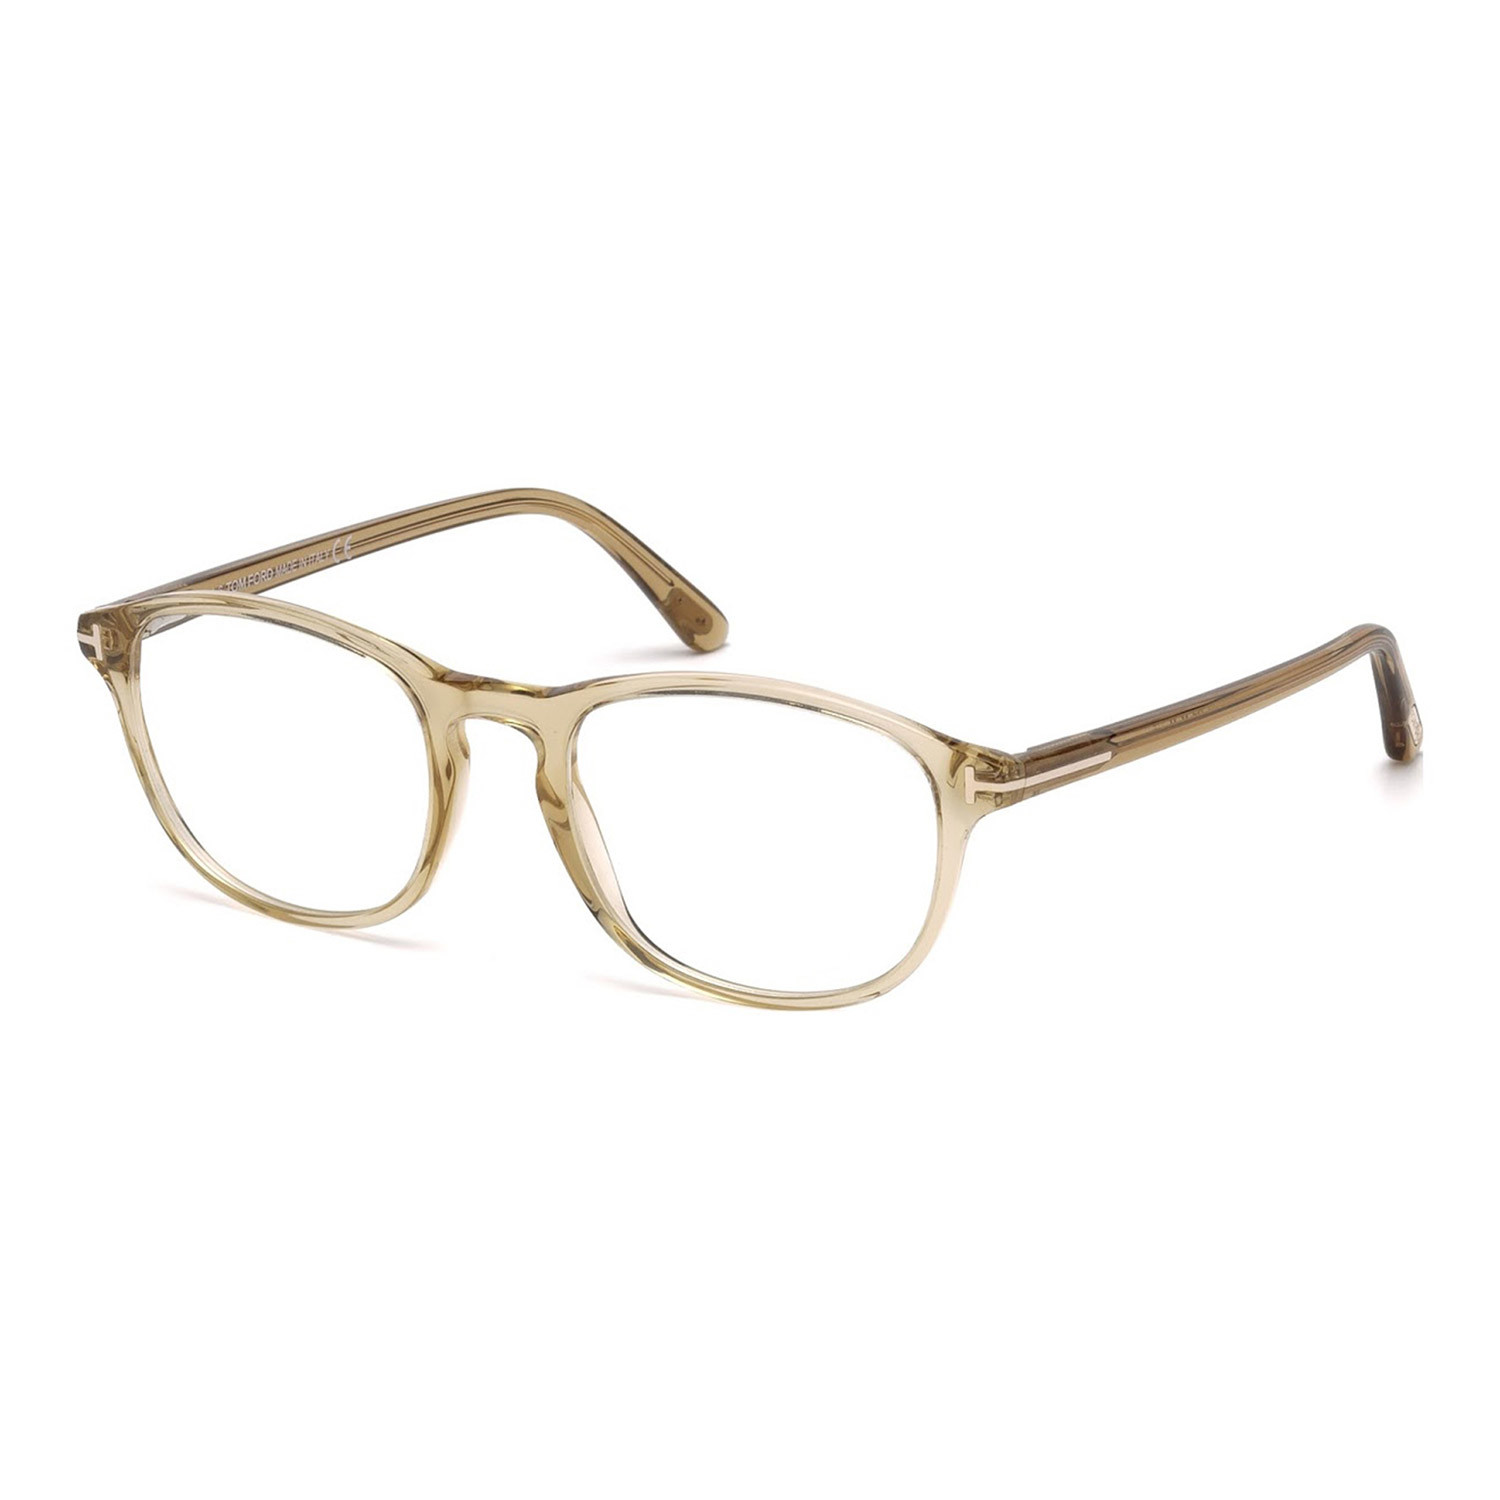 Tom Ford // Men's Classic Round Eyeglass Frames // Beige Crystal